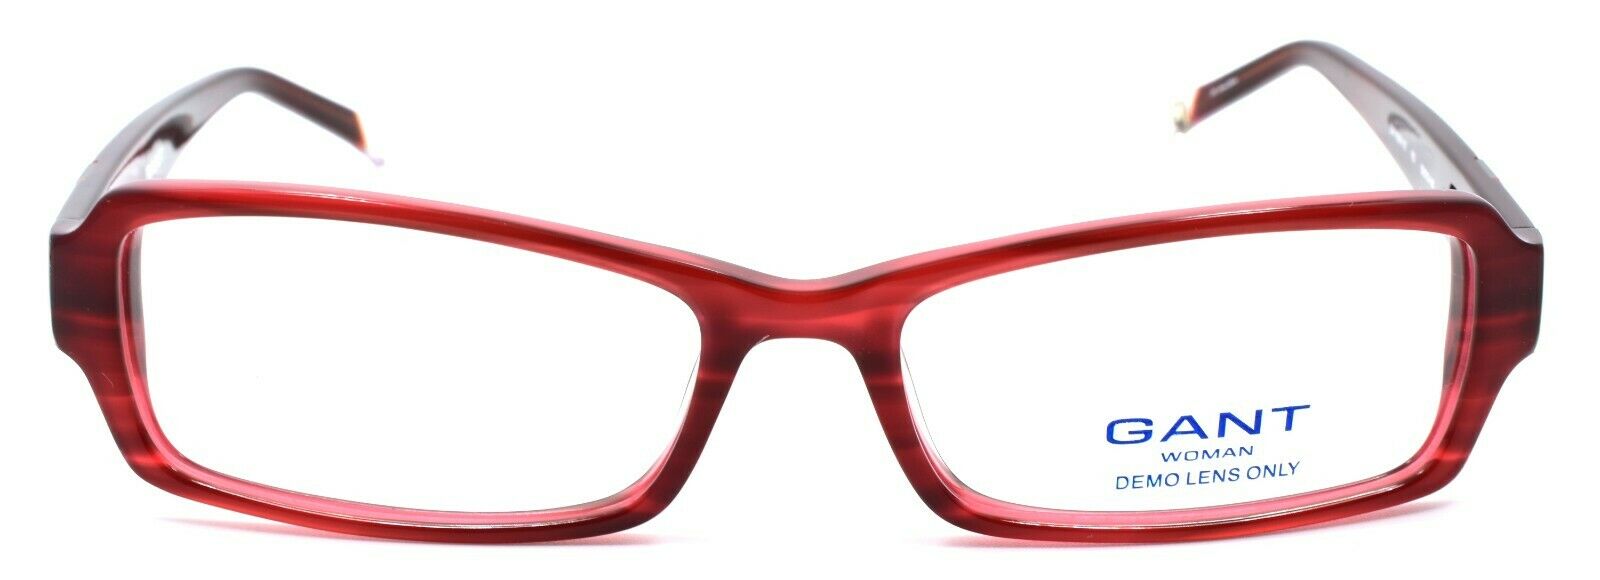 2-GANT GW Fern ST Women's Eyeglasses Frames 52-15-140 Red-715583288409-IKSpecs